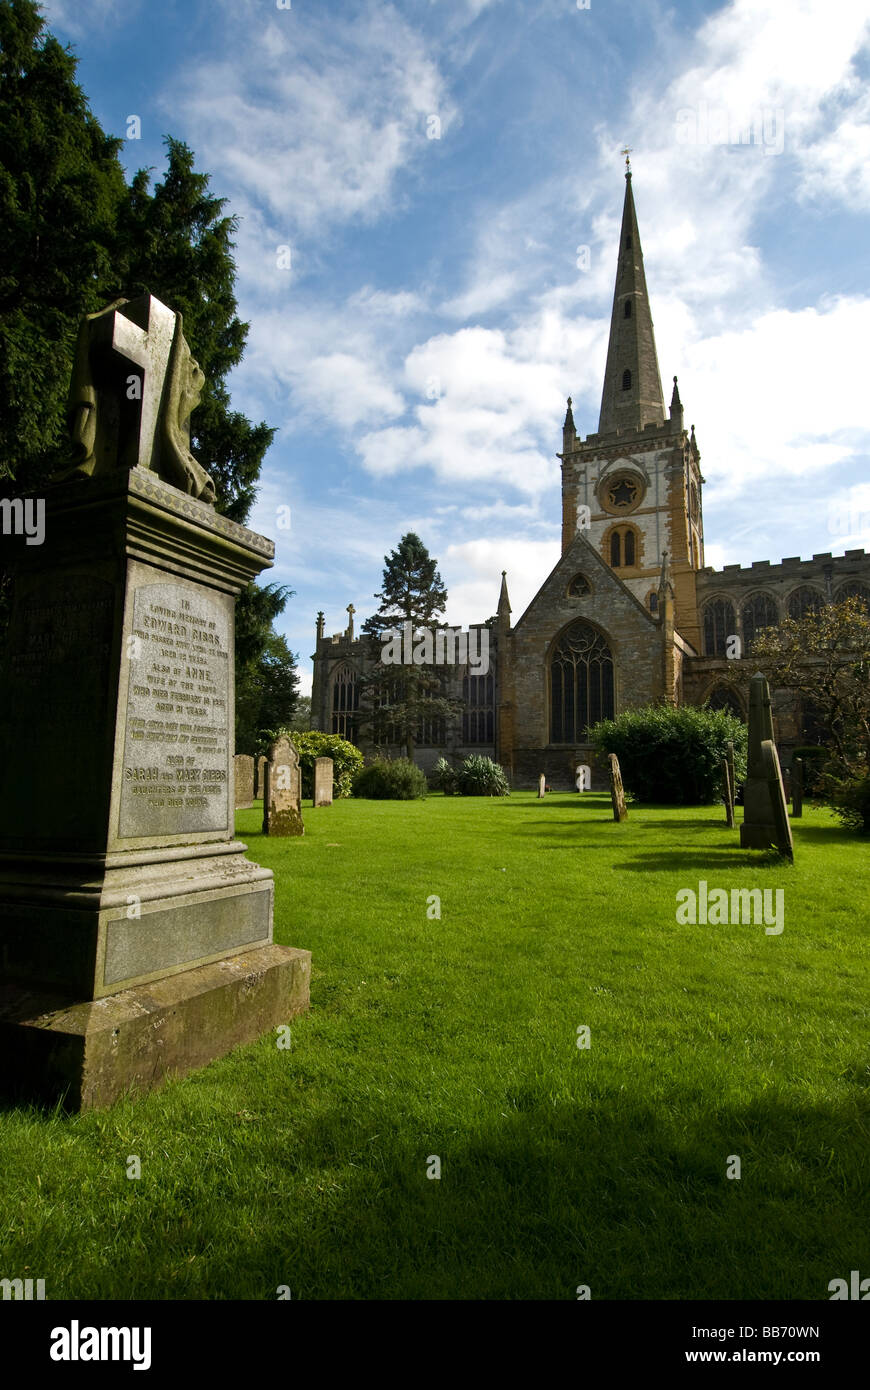 Holy Trinity church and cemetery, Stratford upon Avon, Warwickshire, Englnad, UK. Stock Photo